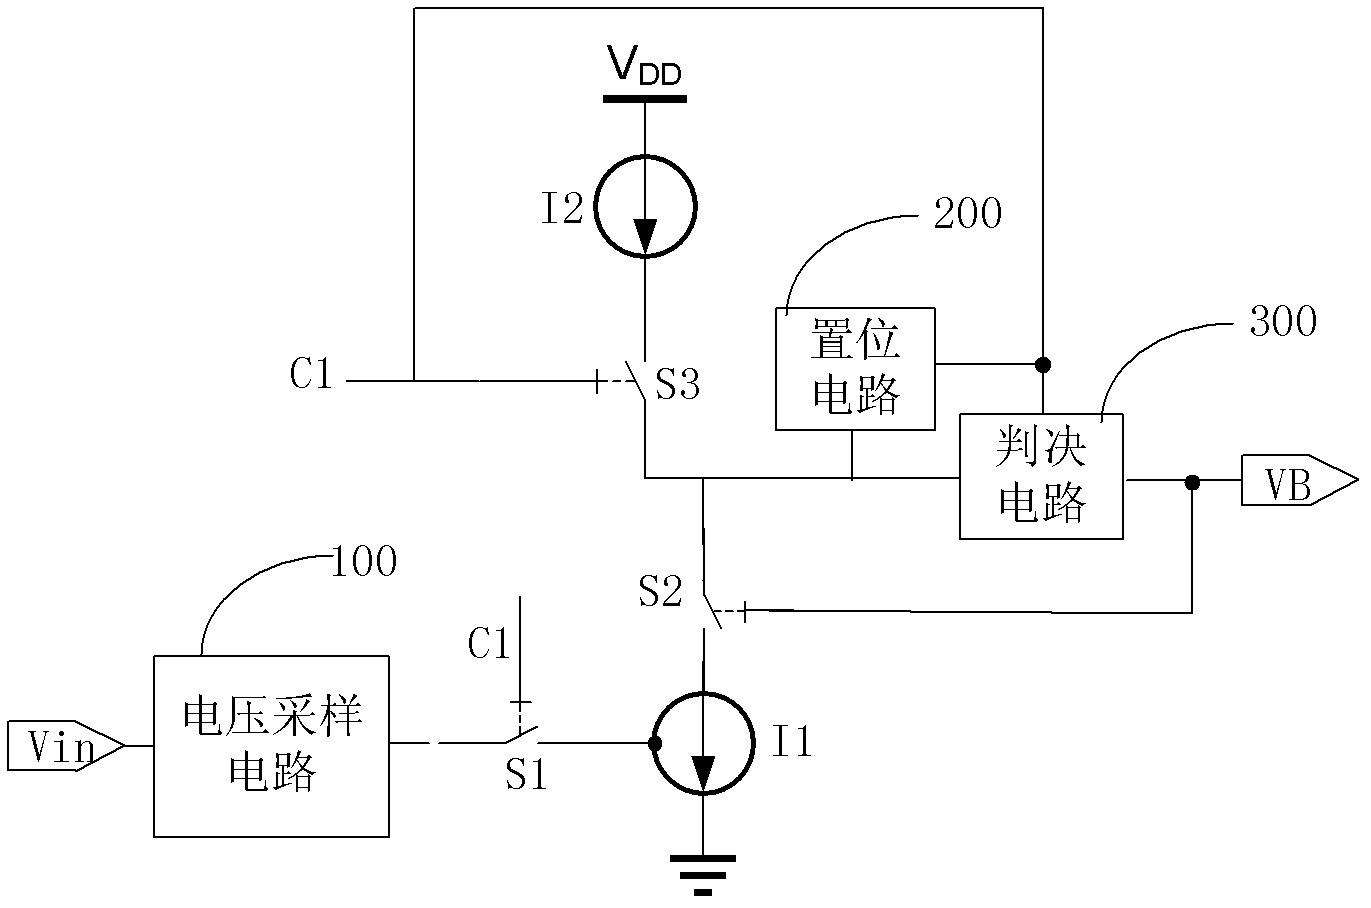 Overvoltage detection circuit